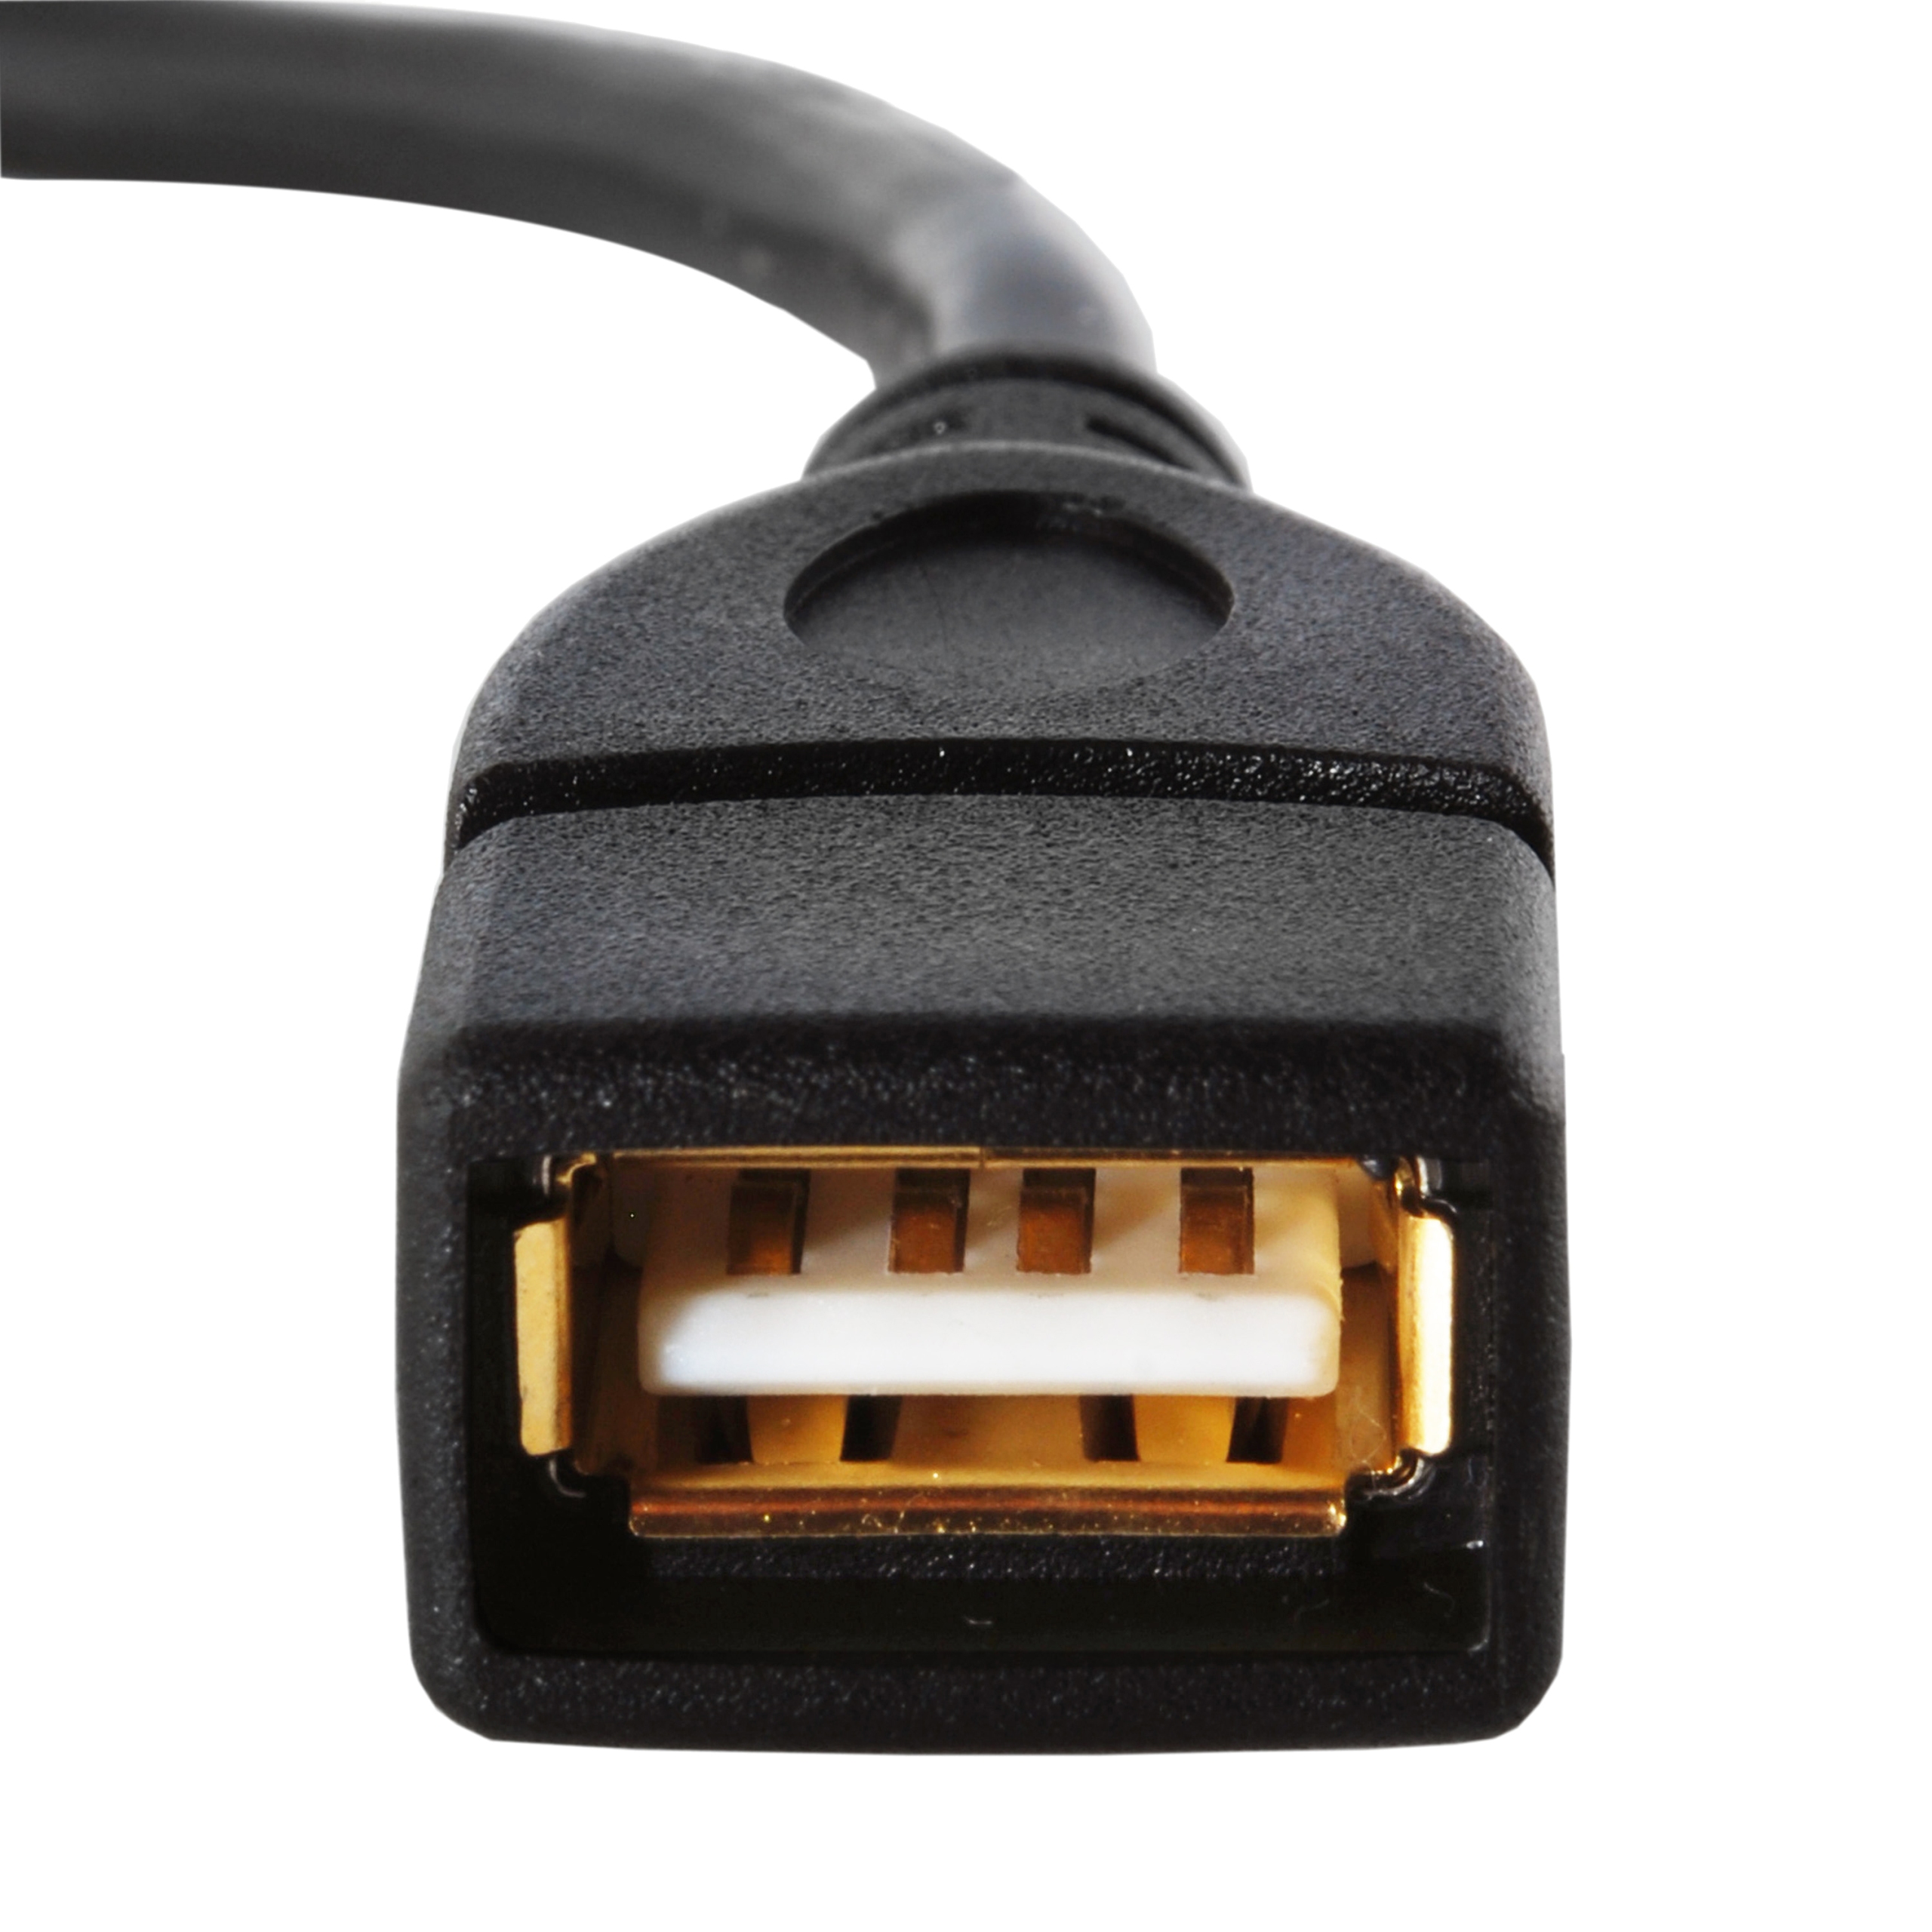 Cable rallonge USB 2.0 Male / Femelle (female) 100cm USB 2.0 Extension  Cable 1M